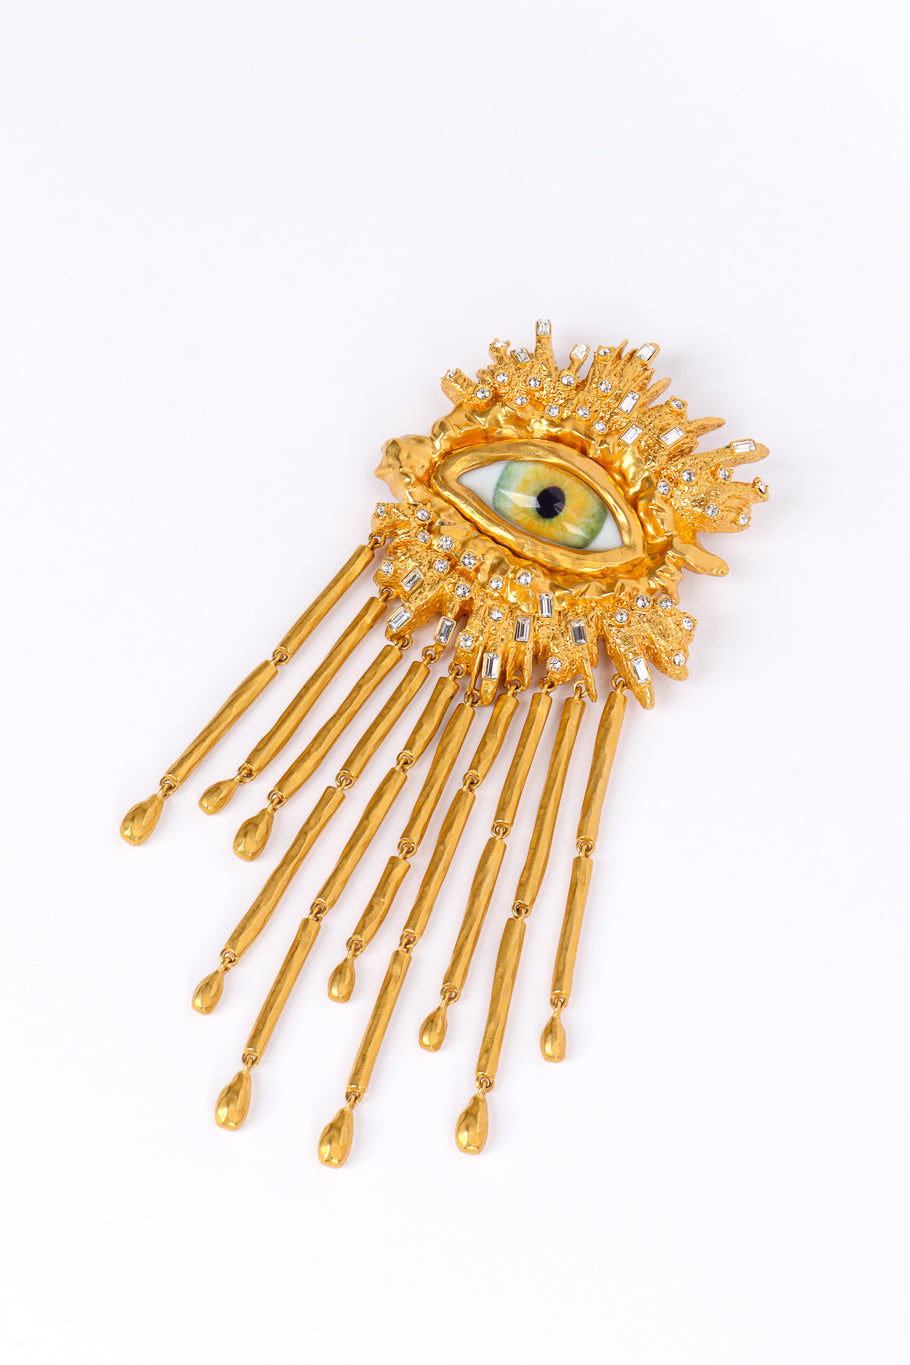 Schiaparelli Surrealist Bursting Eye Brooch front @recessla